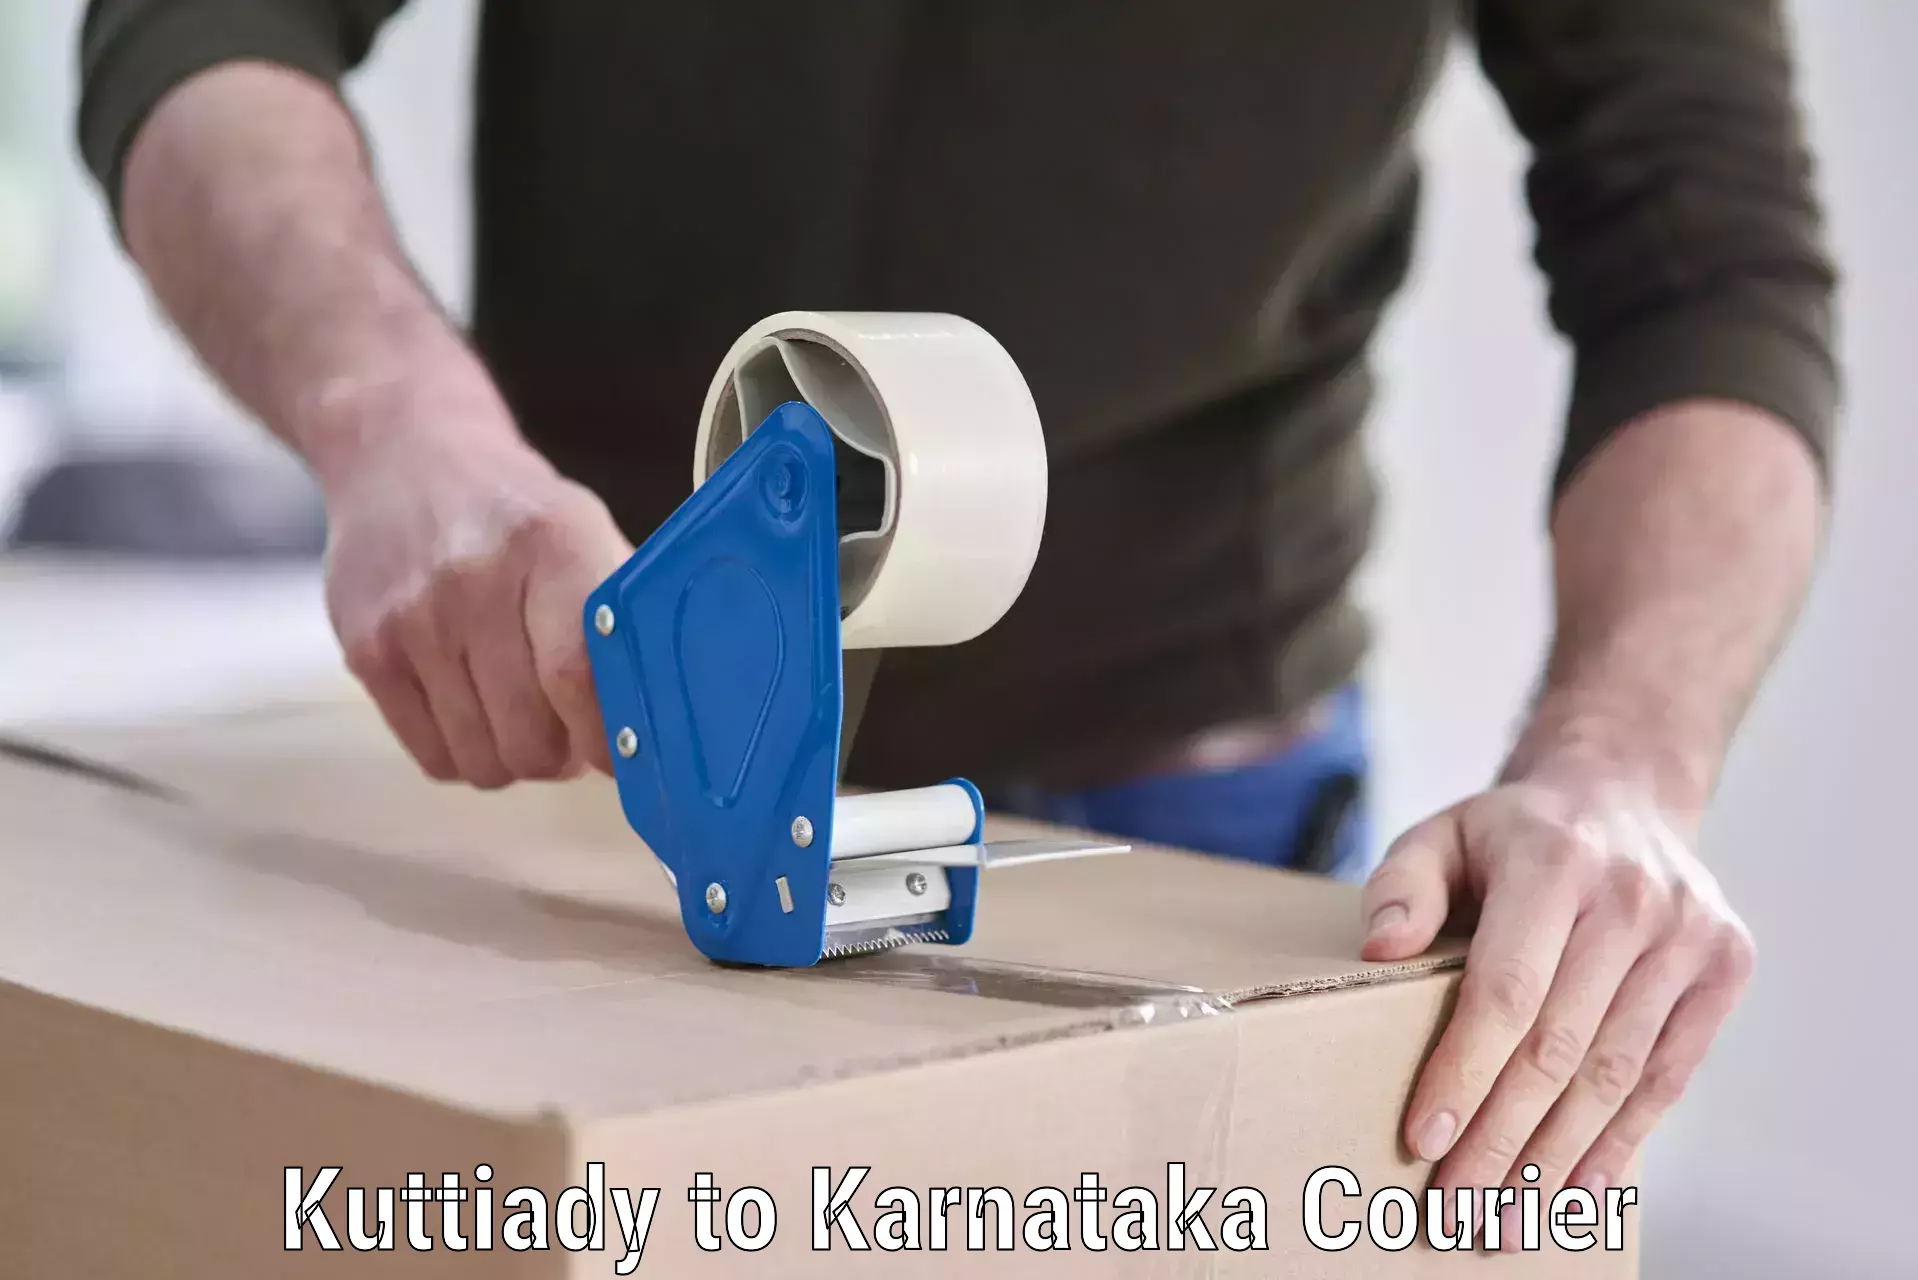 Home shifting experts Kuttiady to Karnataka